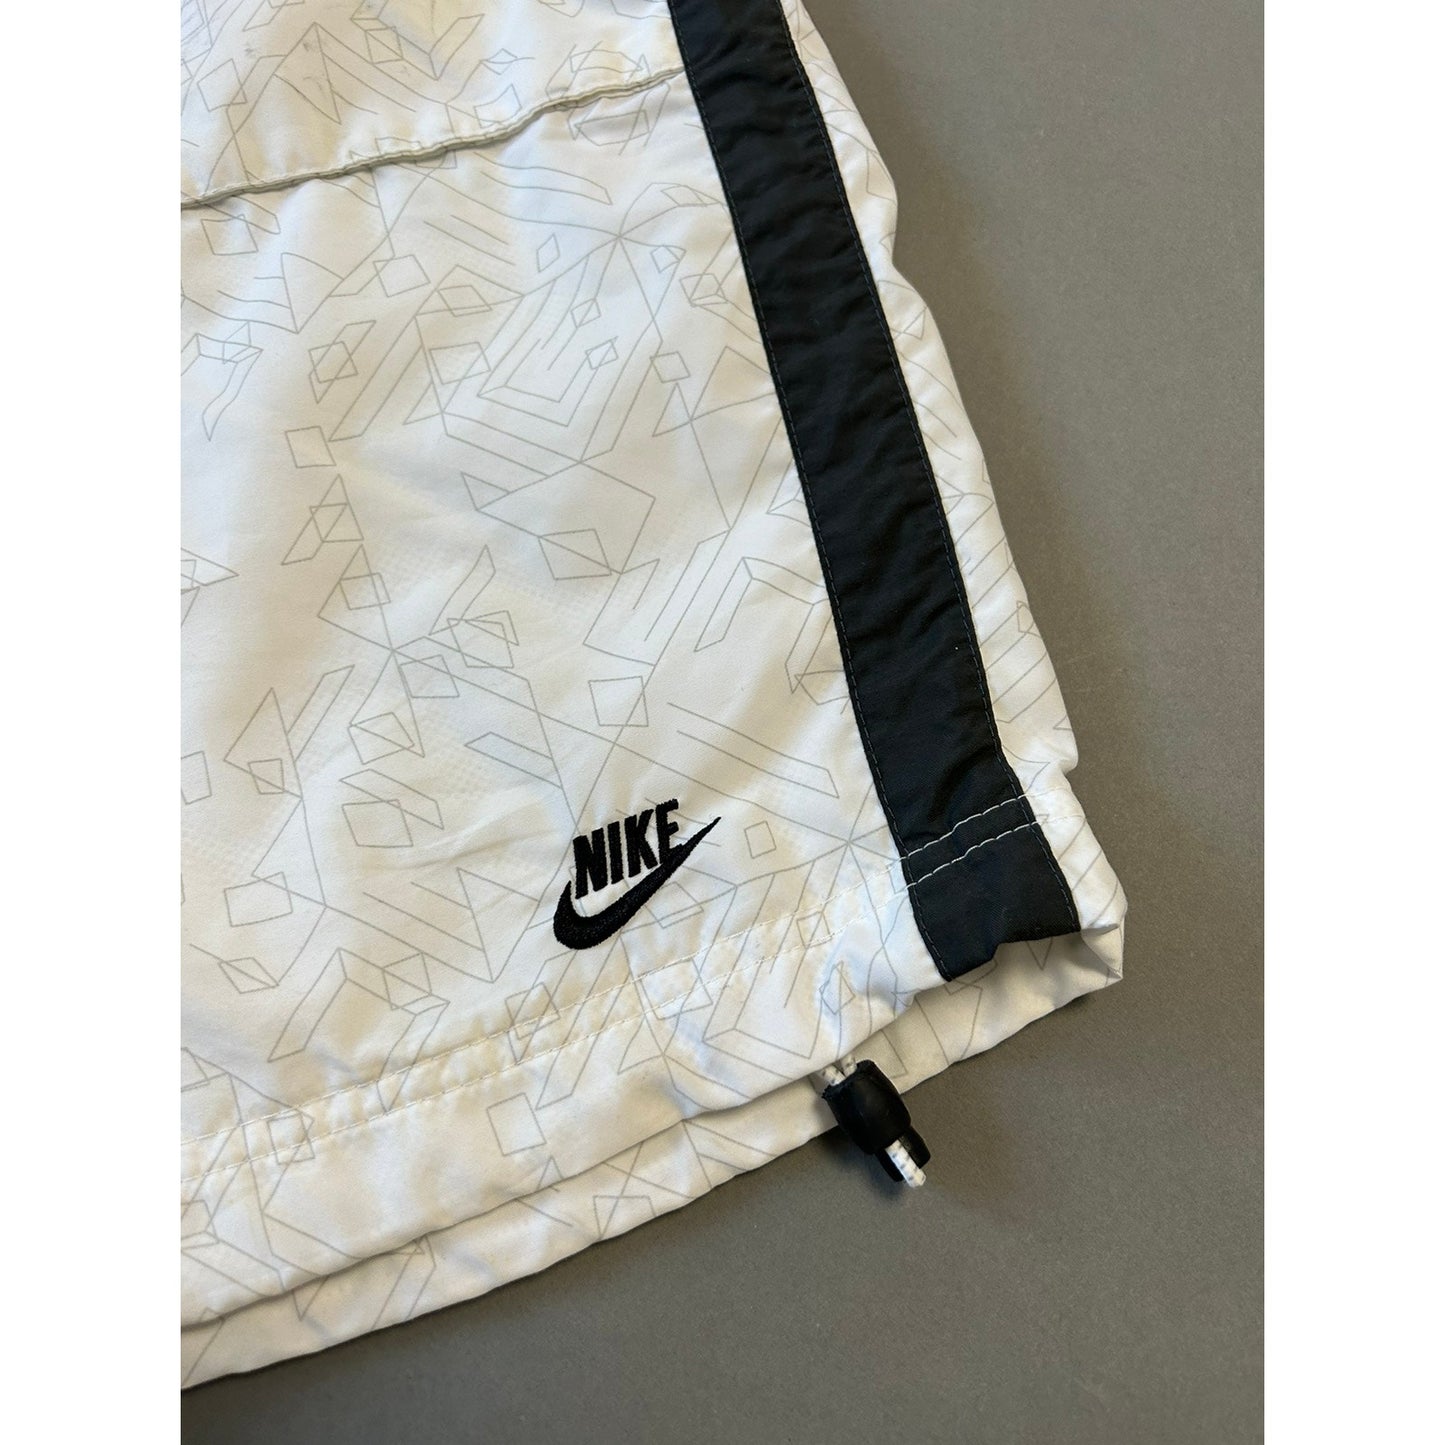 Nike vintage white shorts small swoosh 2000s